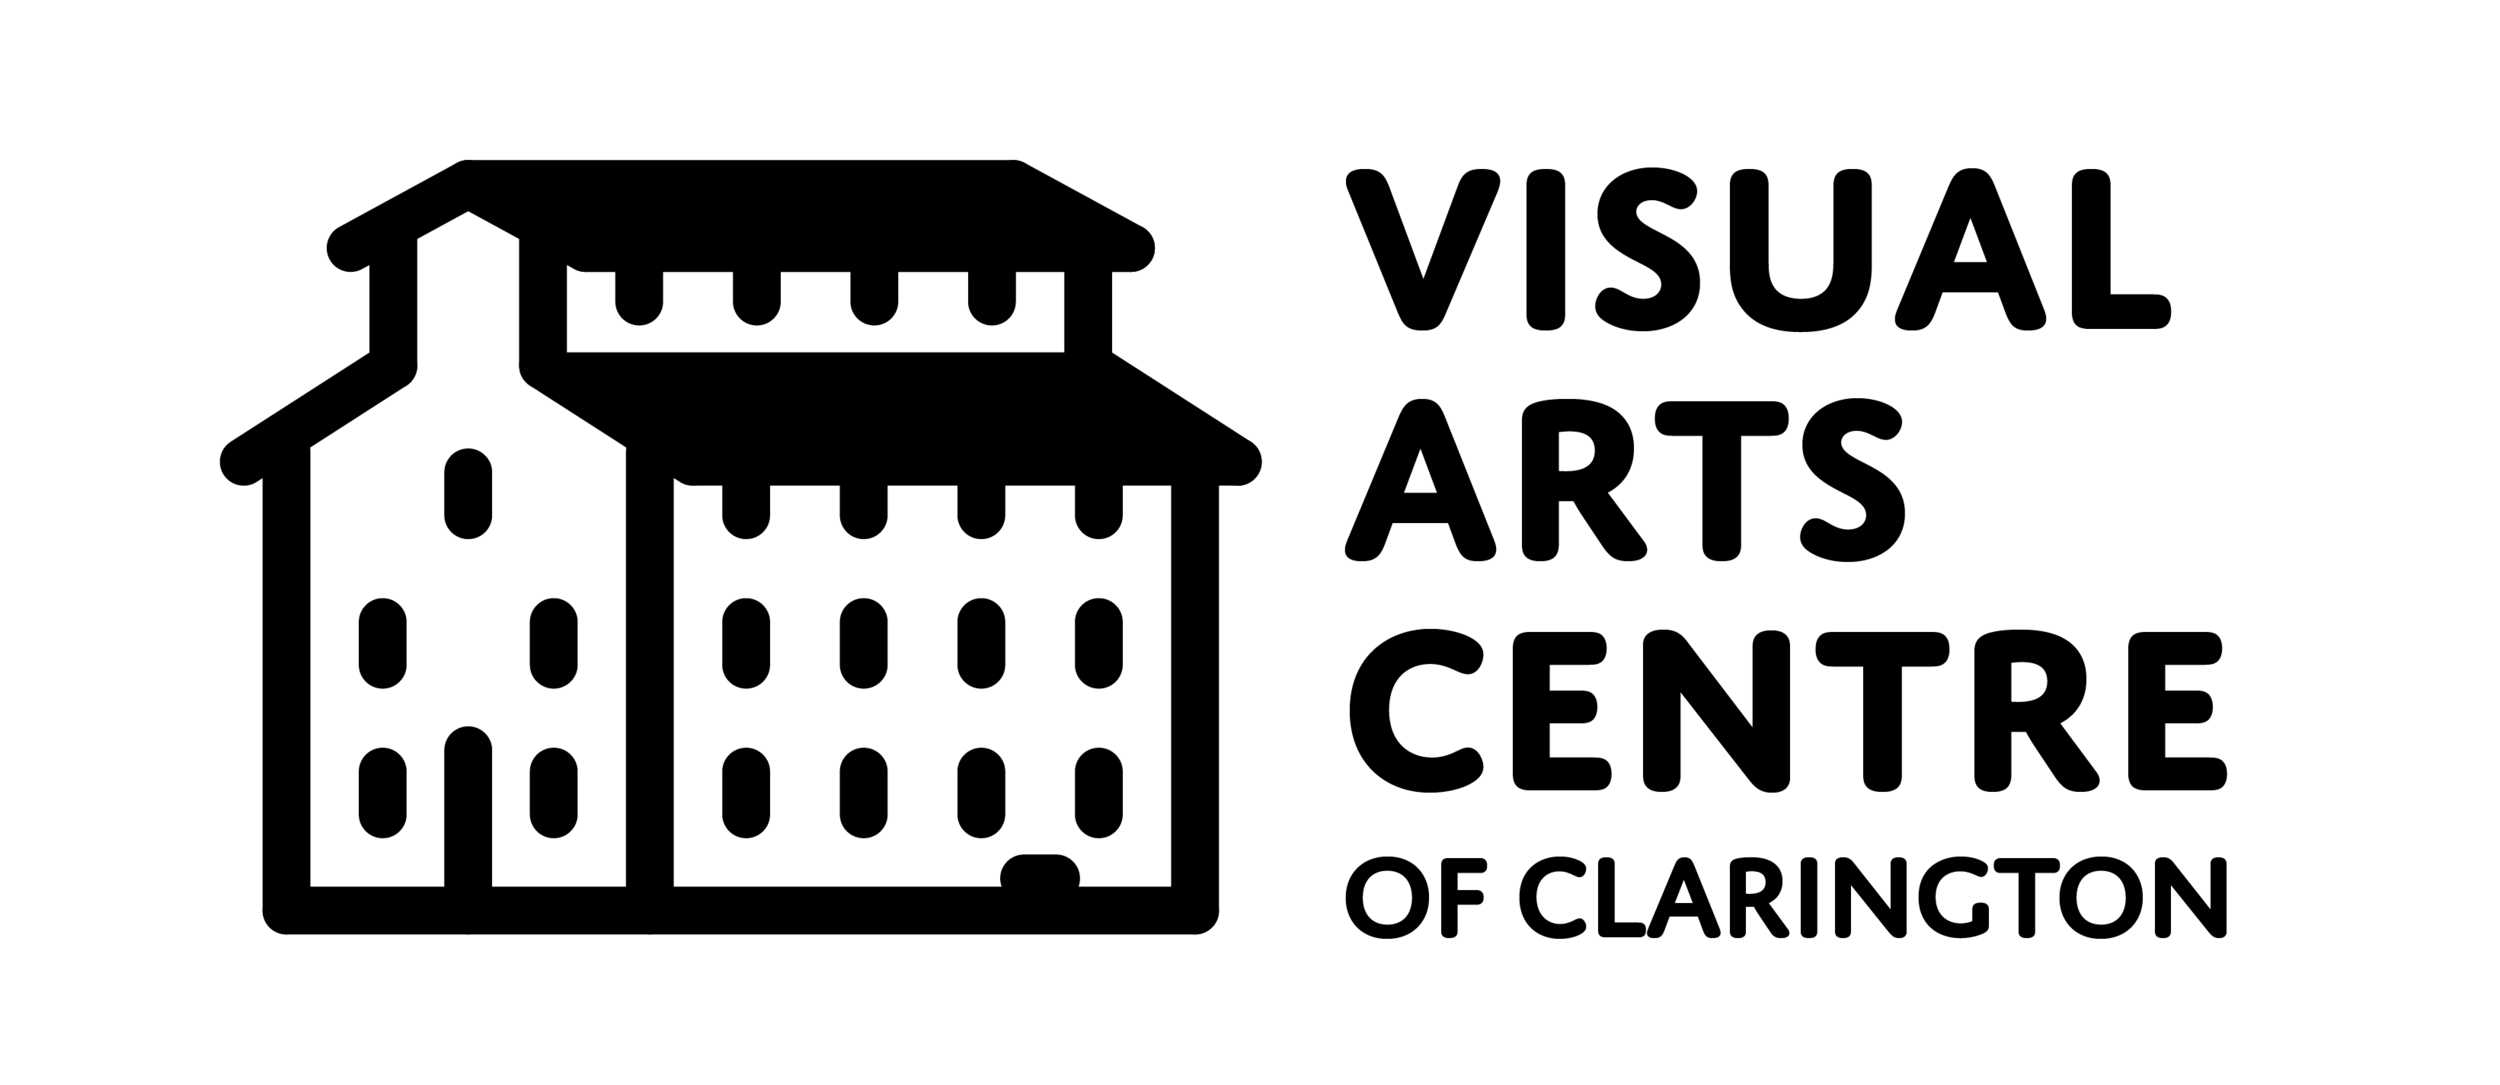 VAC 2018 logo_black transparency.png